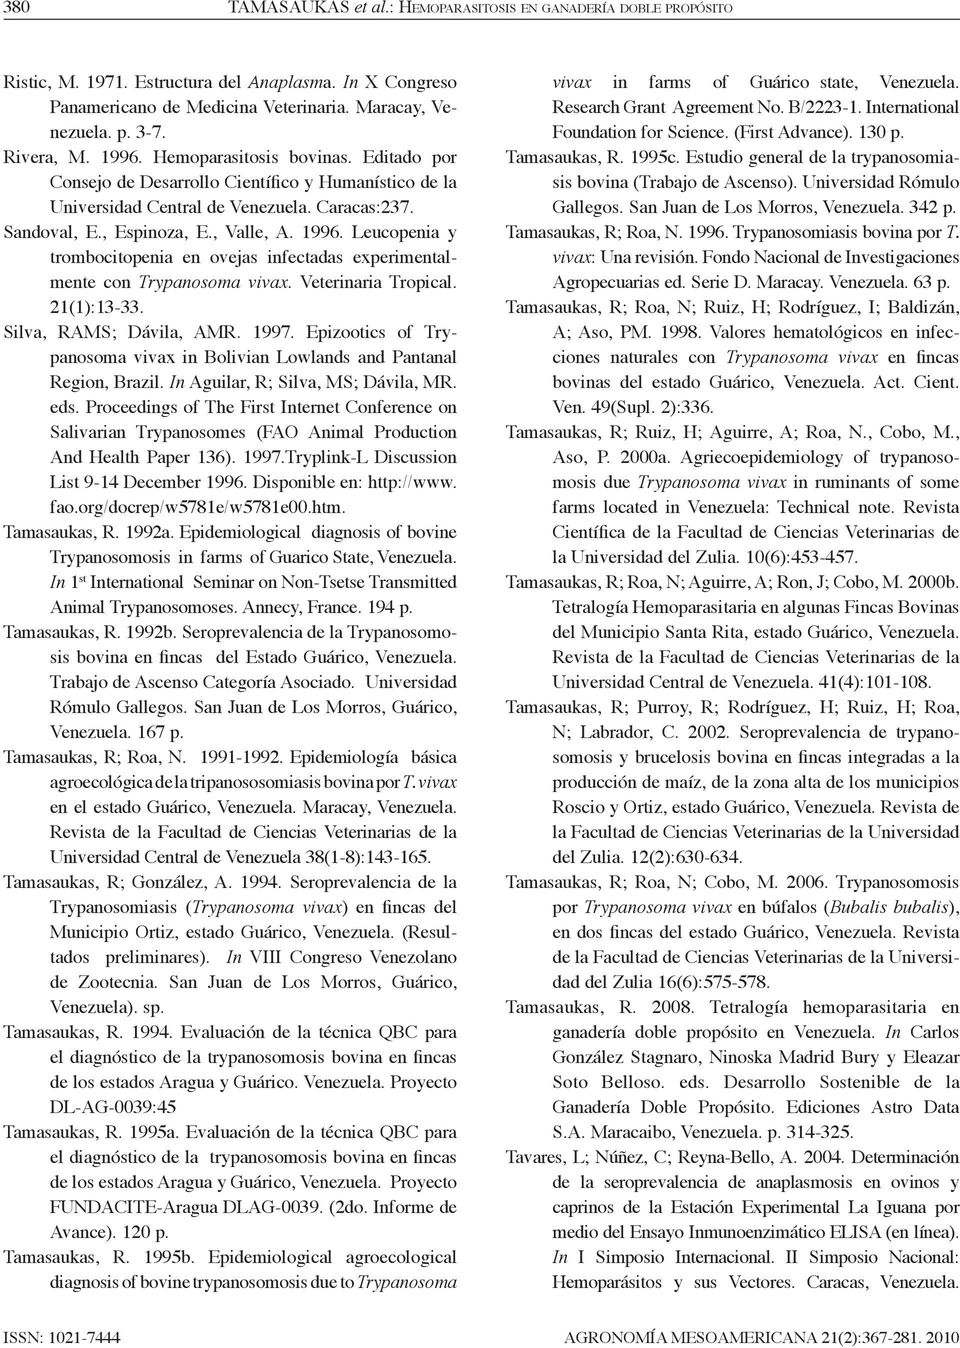 Veterinaria Tropical. 21(1):13-33. Silva, RAMS; Dávila, AMR. 1997. Epizootics of Trypanosoma vivax in Bolivian Lowlands and Pantanal Region, Brazil. In Aguilar, R; Silva, MS; Dávila, MR. eds.